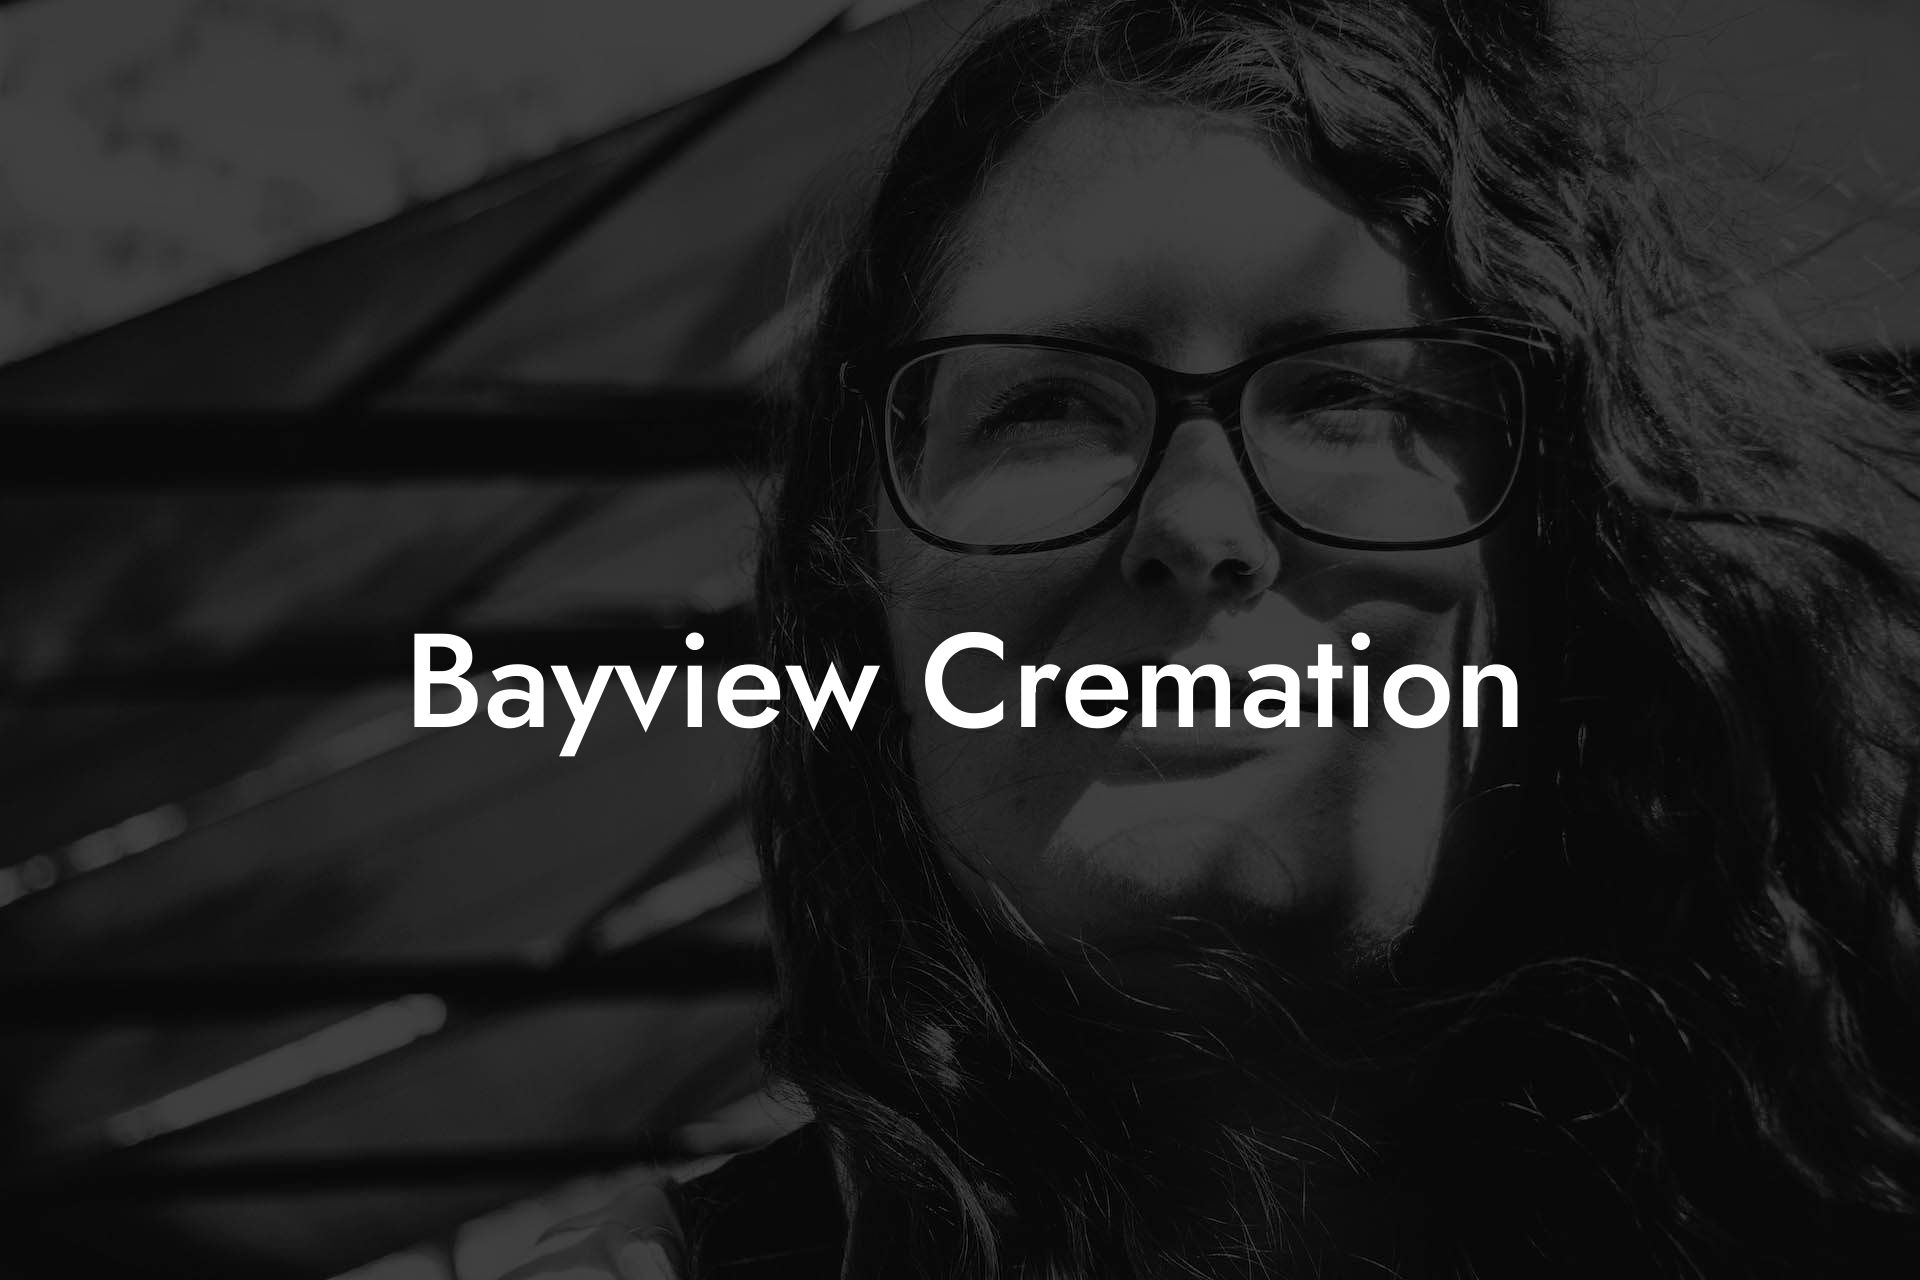 Bayview Cremation